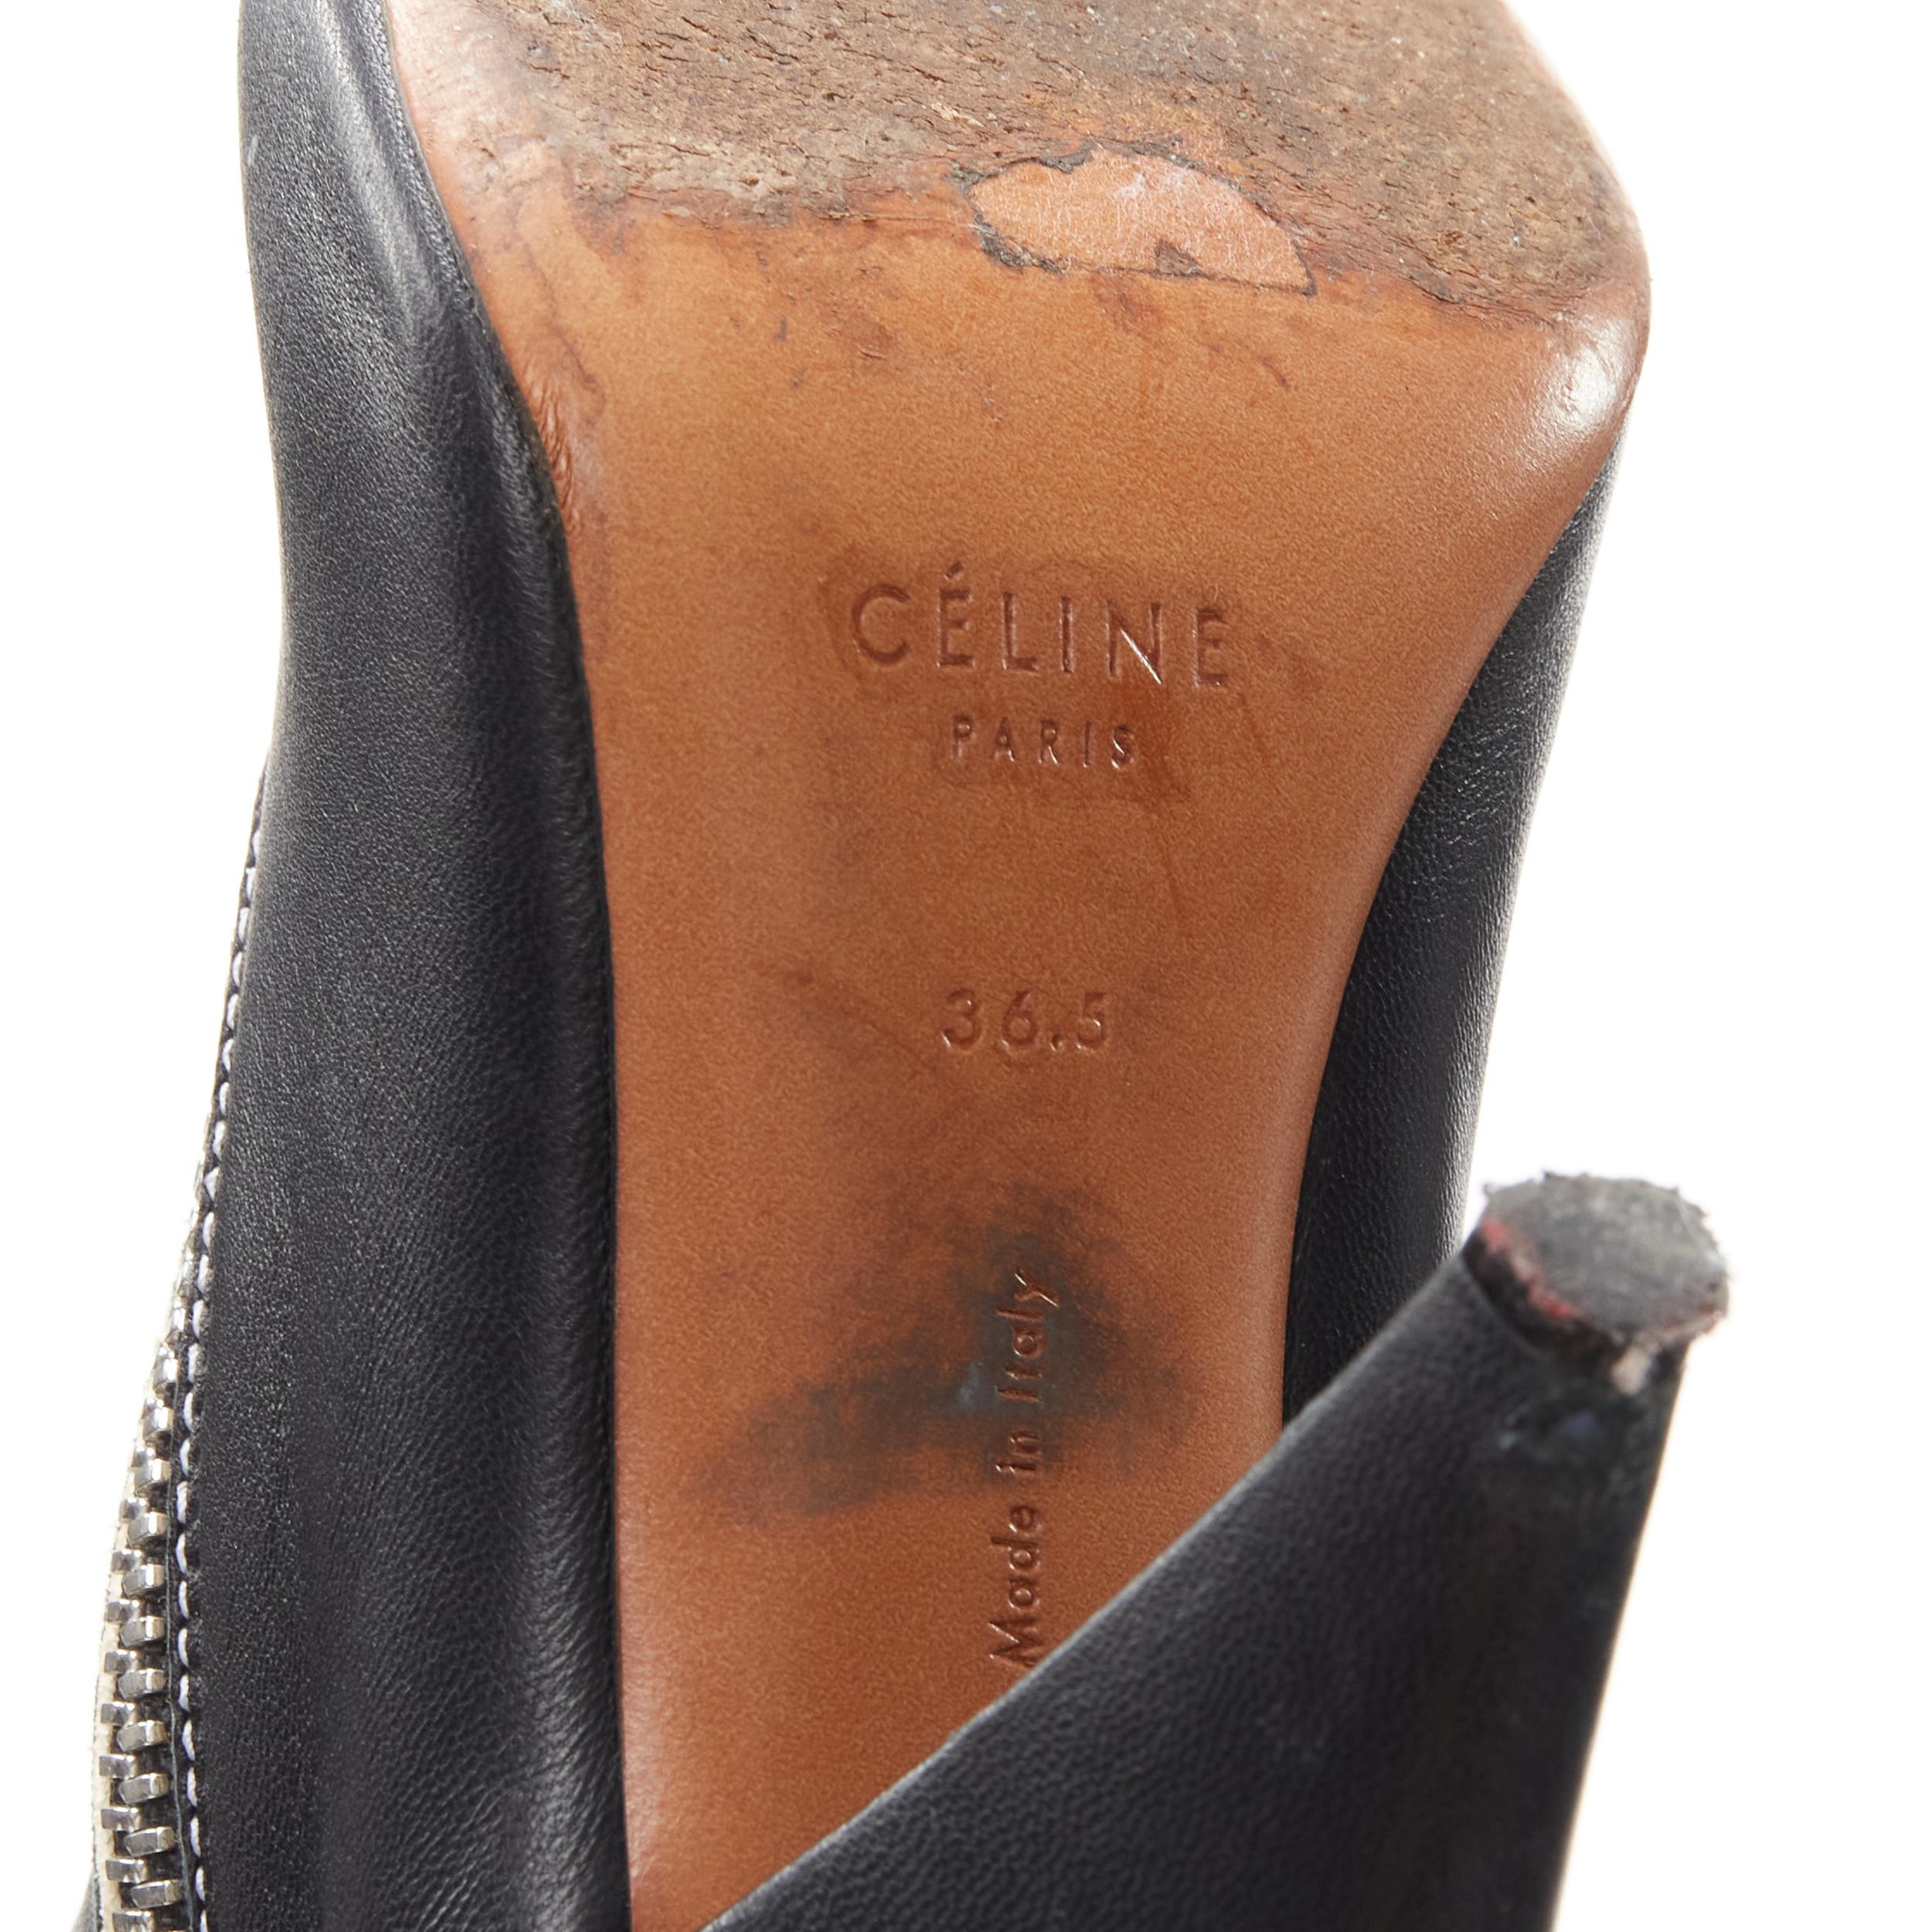 OLD CELINE Phoebe Philo black leather twist silver zip cone heel bootie EU36.5 For Sale 2